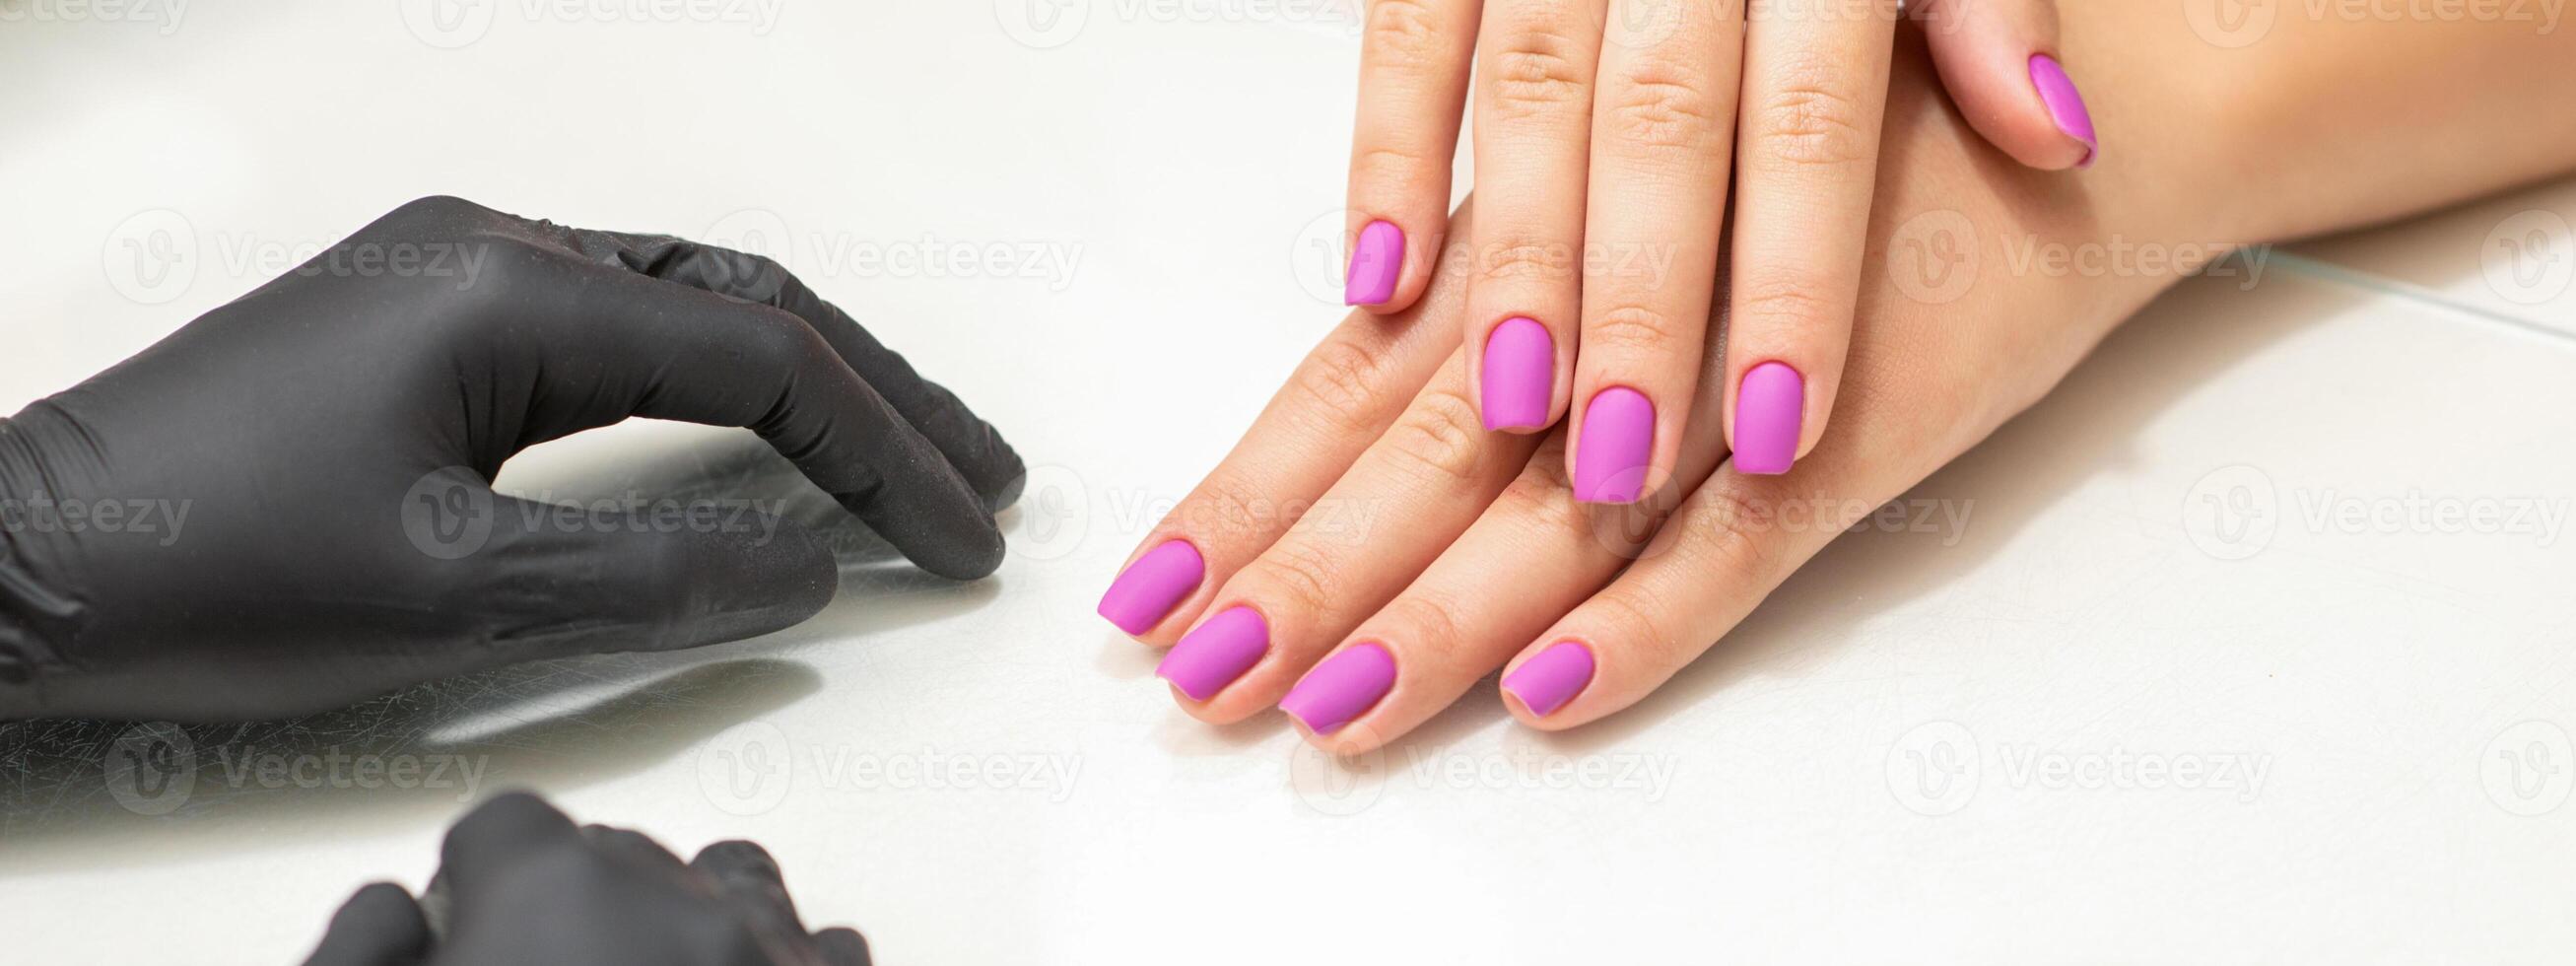 mooi vingers met Purper nagels na nagel Pools procedure in manicure salon. foto